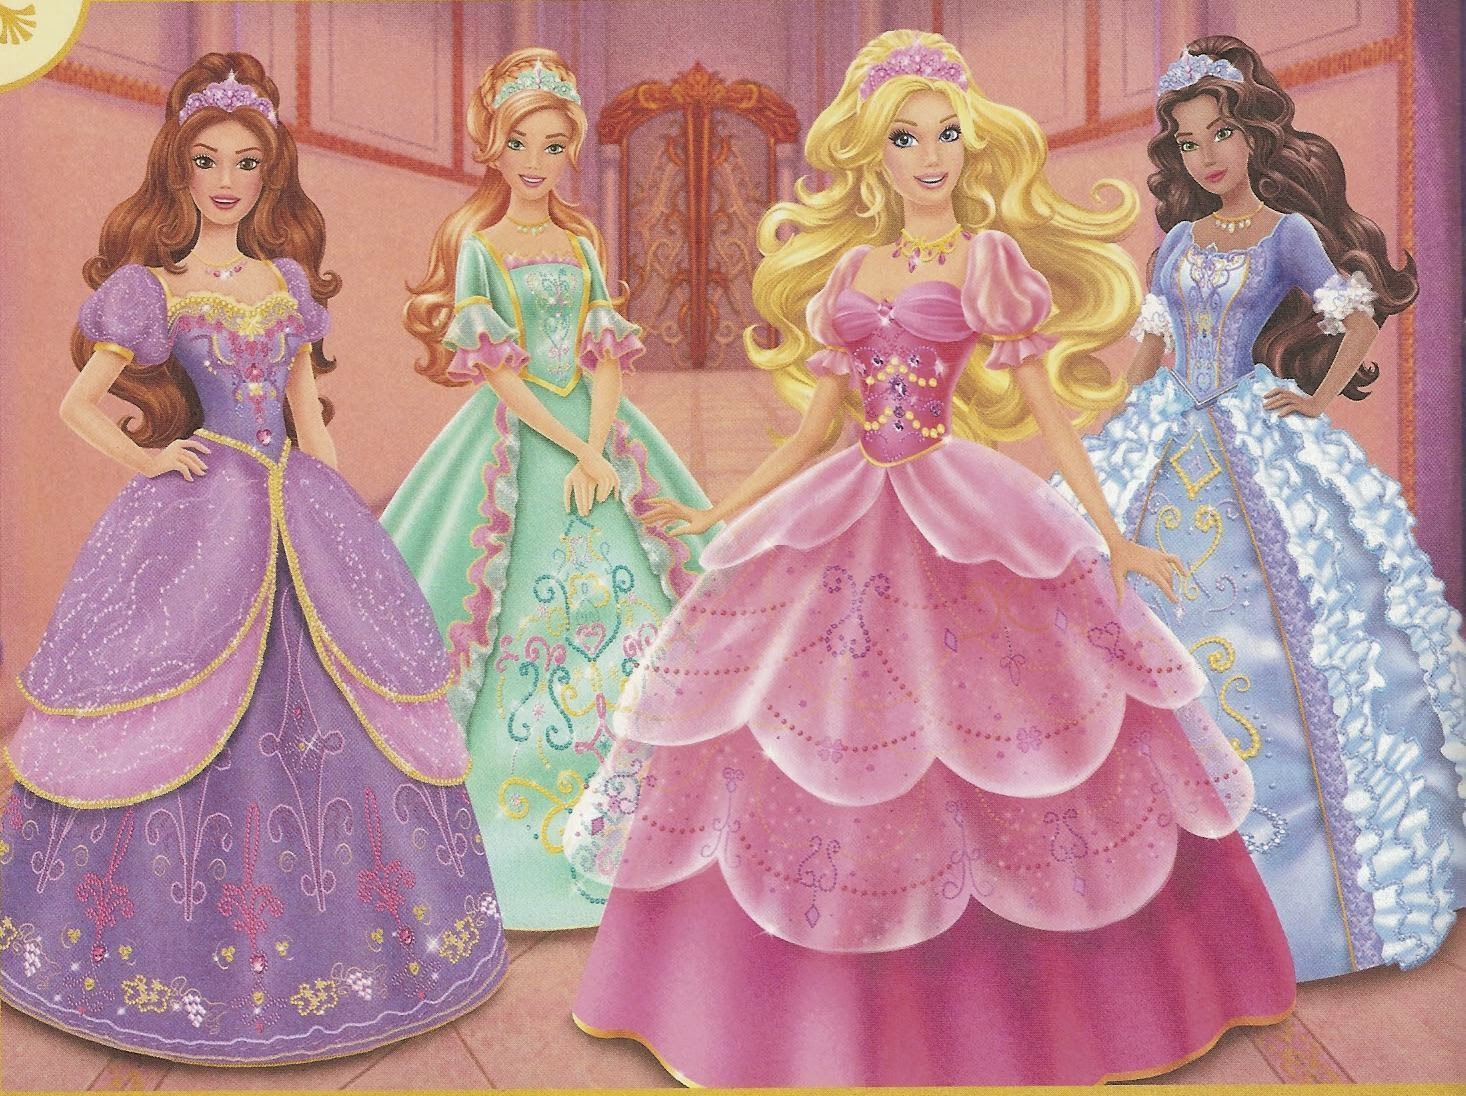 Jogo Barbie Princess Love